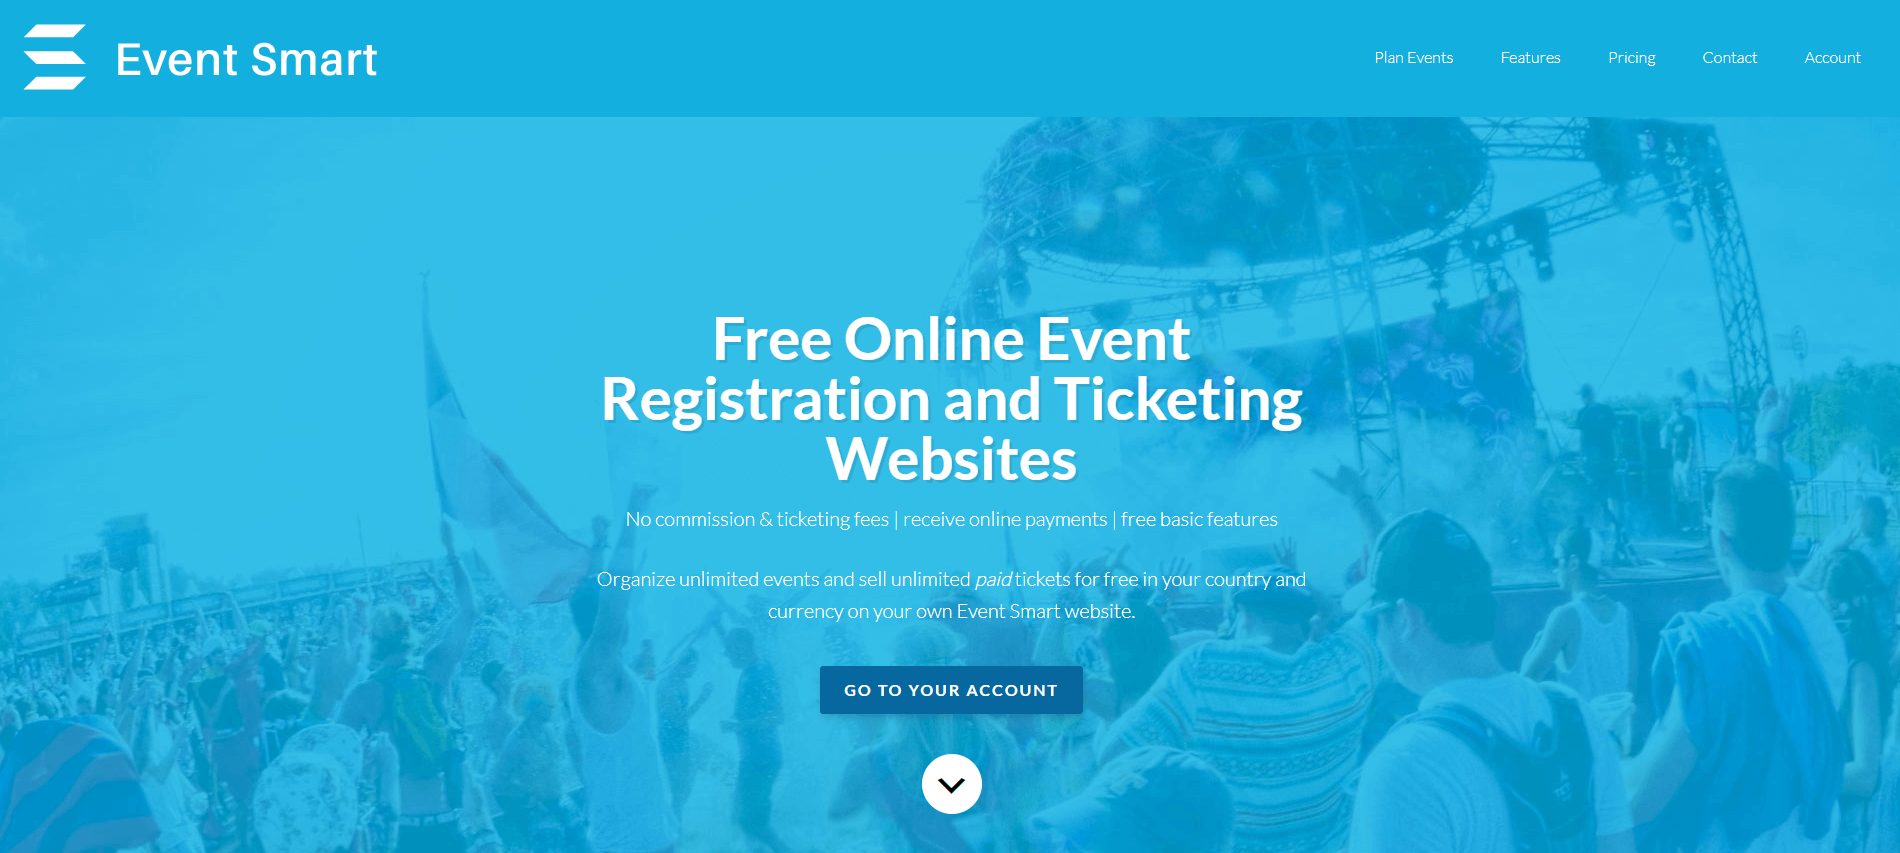 The Event Smart website.